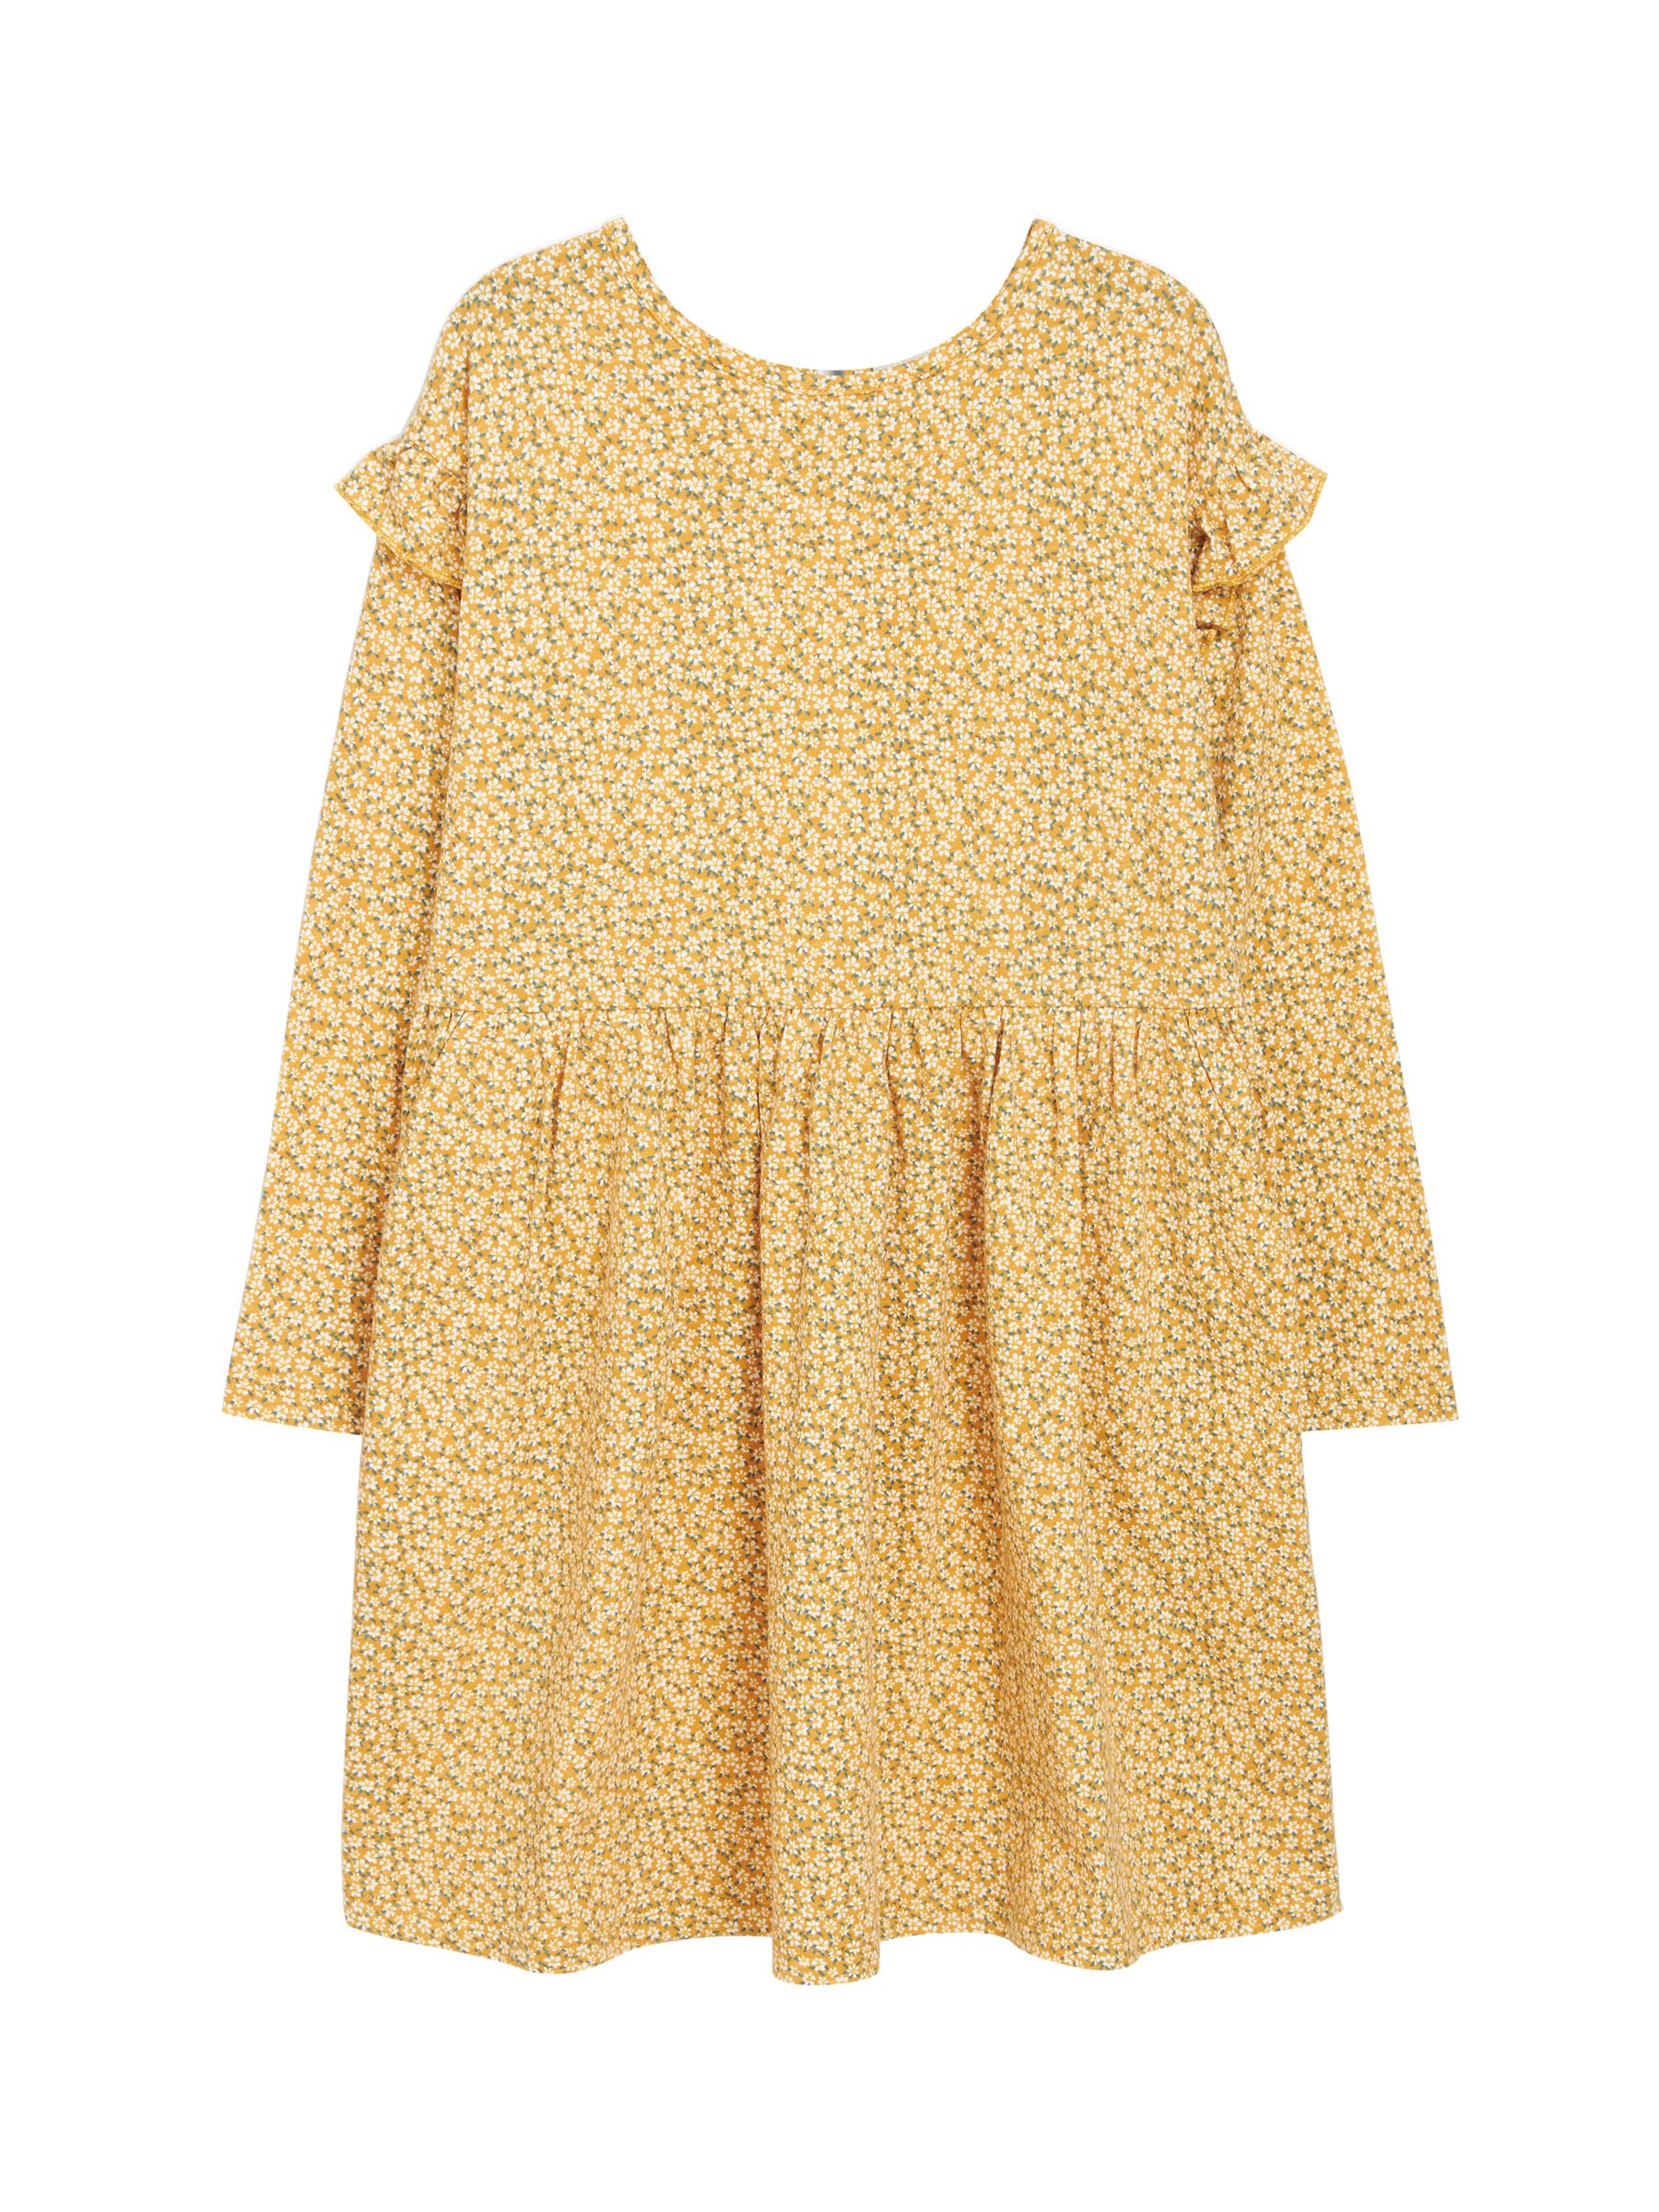 John Lewis & Partners Girls' Floral Print Dress, Yellow